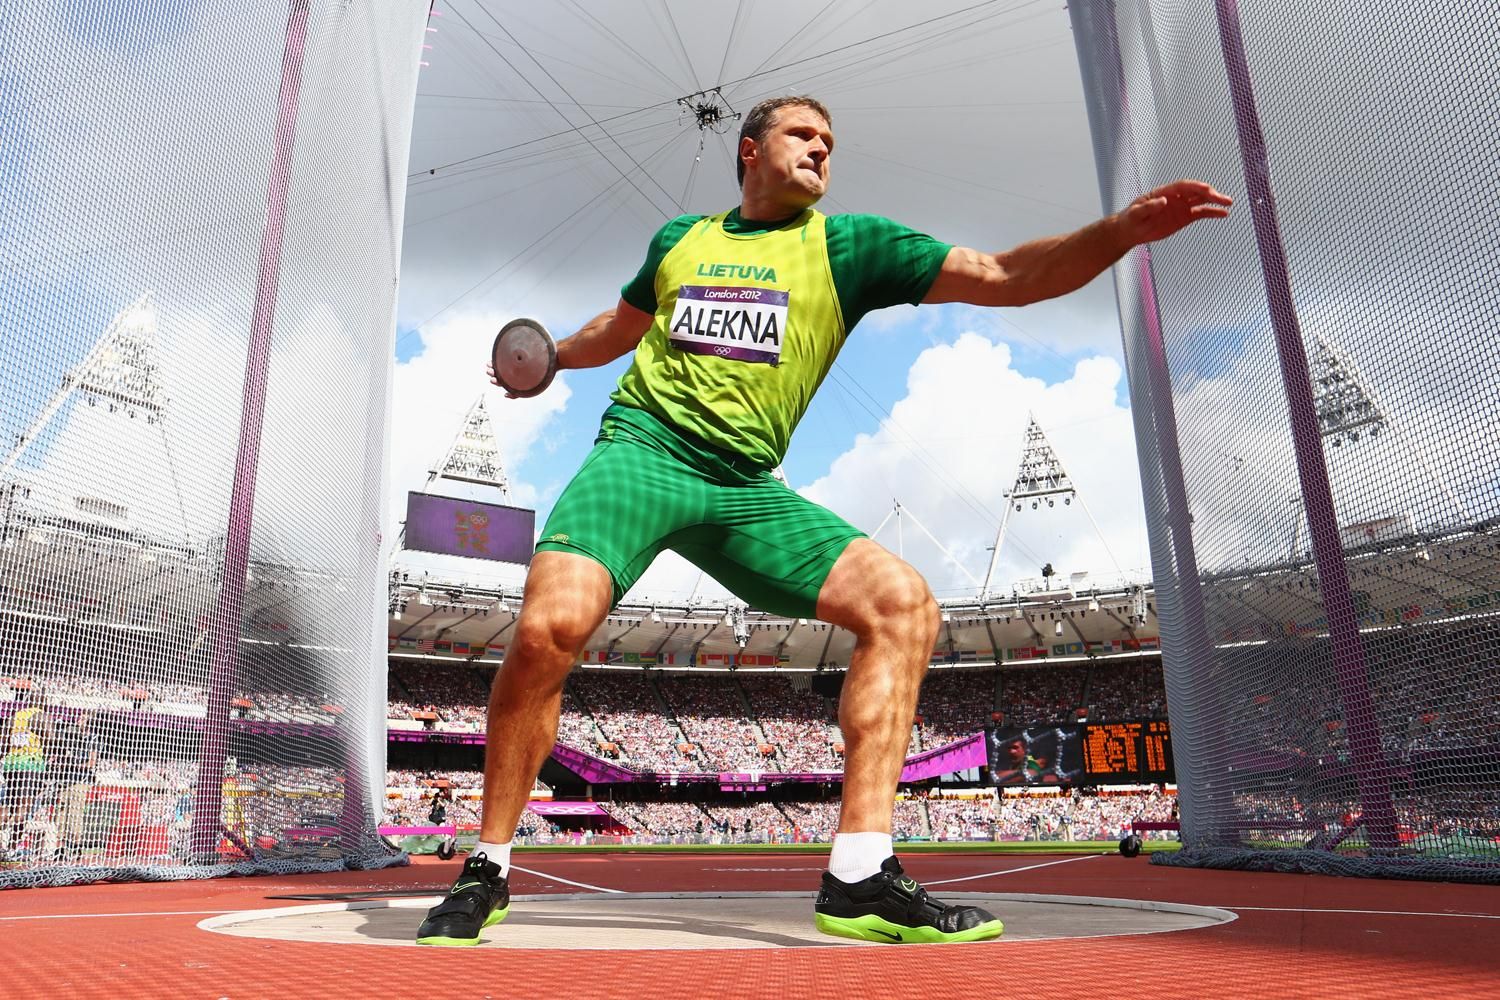 Virgilijus ALEKNA | Profile | World Athletics